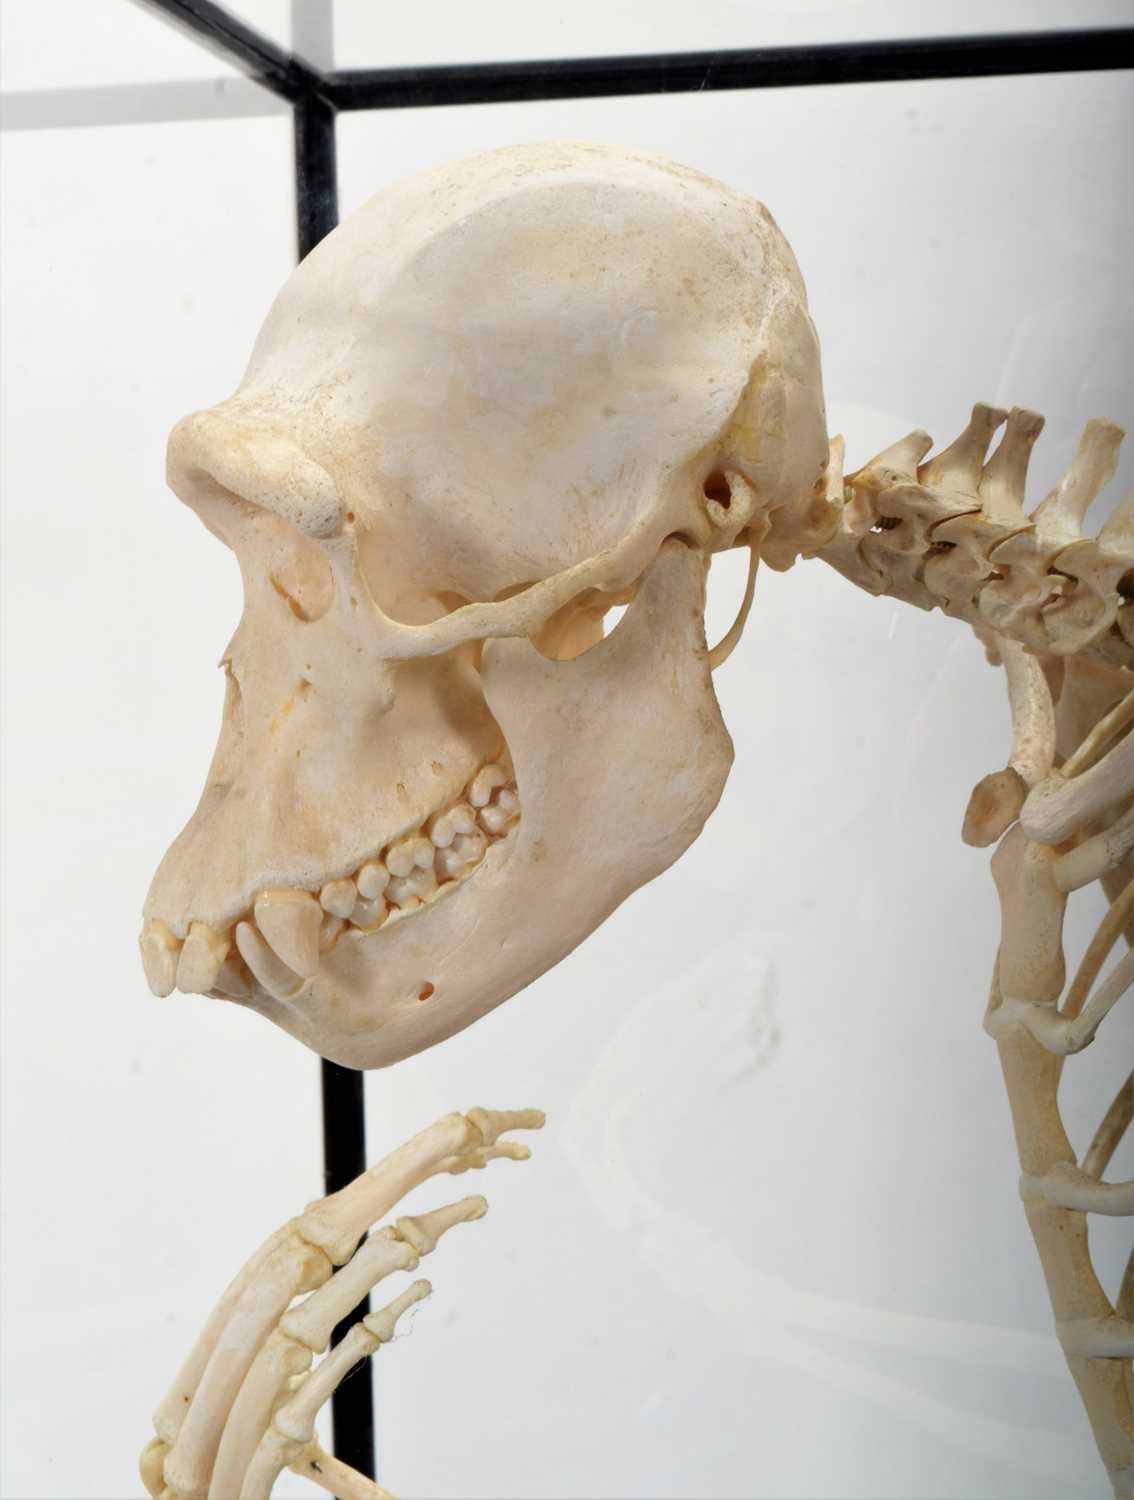 Skeletons/Anatomy: A Rare Cased Chimpanzee Skeleton (Pan troglodytes), captive bred, circa 2010, a - Image 12 of 12